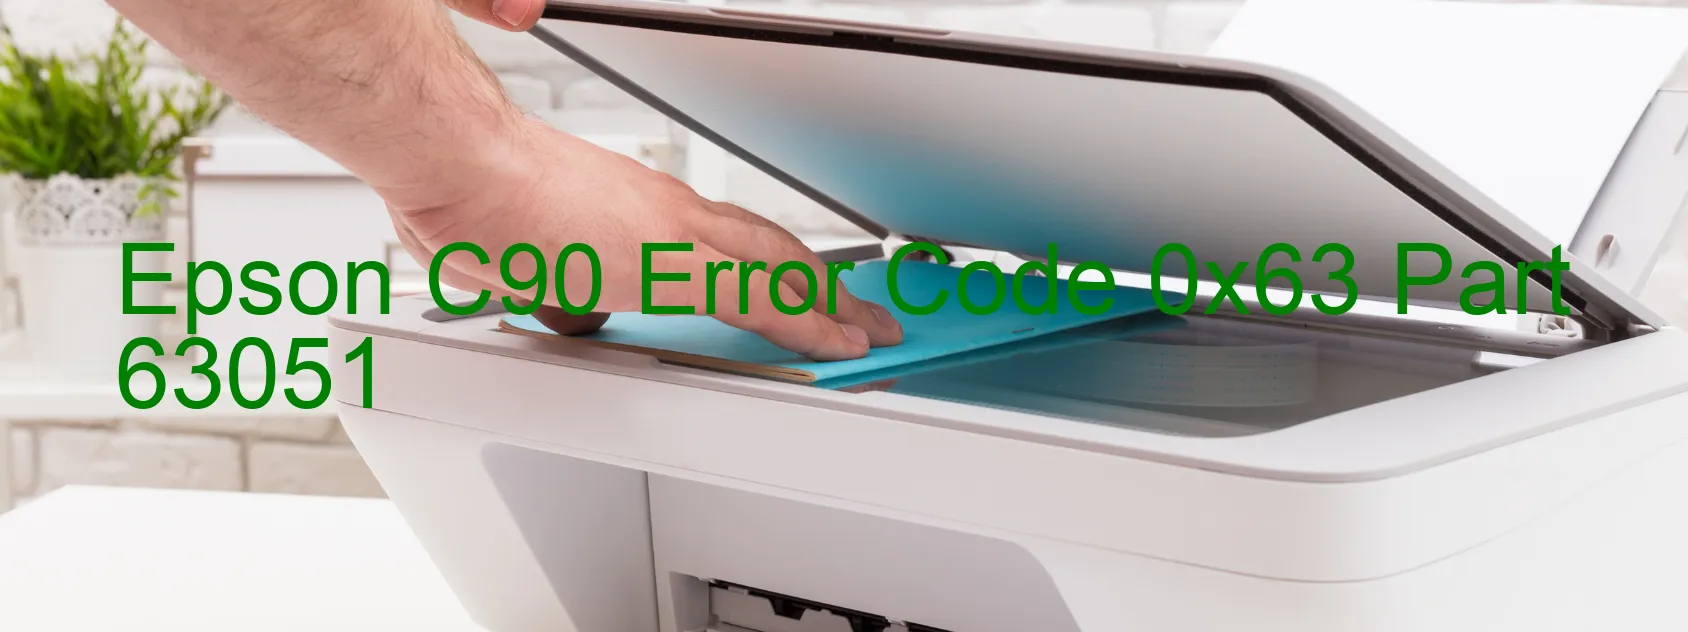 Epson C90 Error Code 0x63 Part 63051